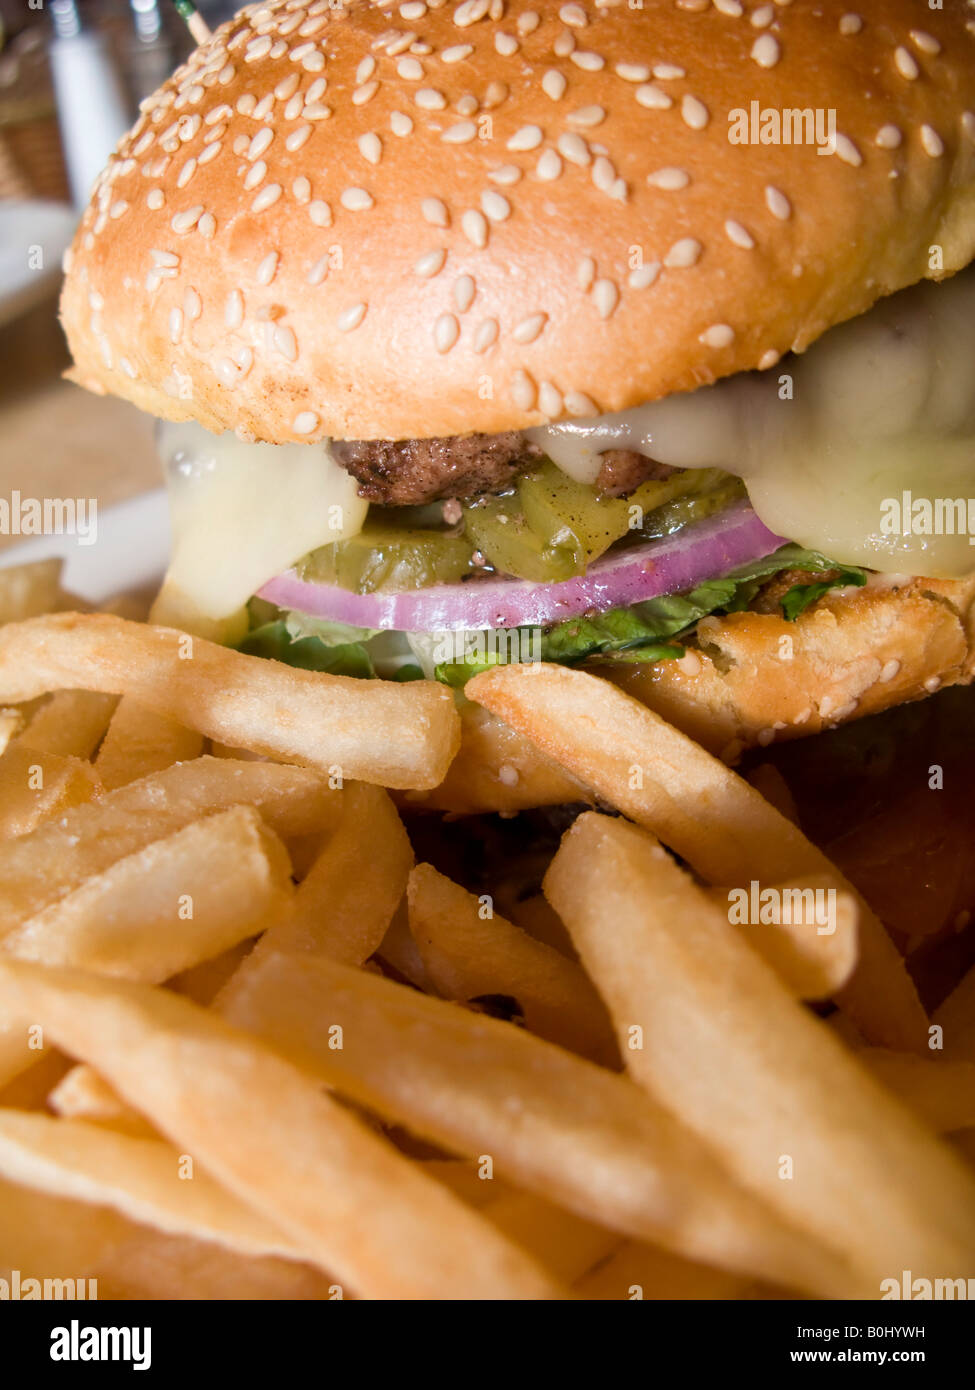 Cheeseburger and french fries on plate, Washington DC, USA Stock Photo